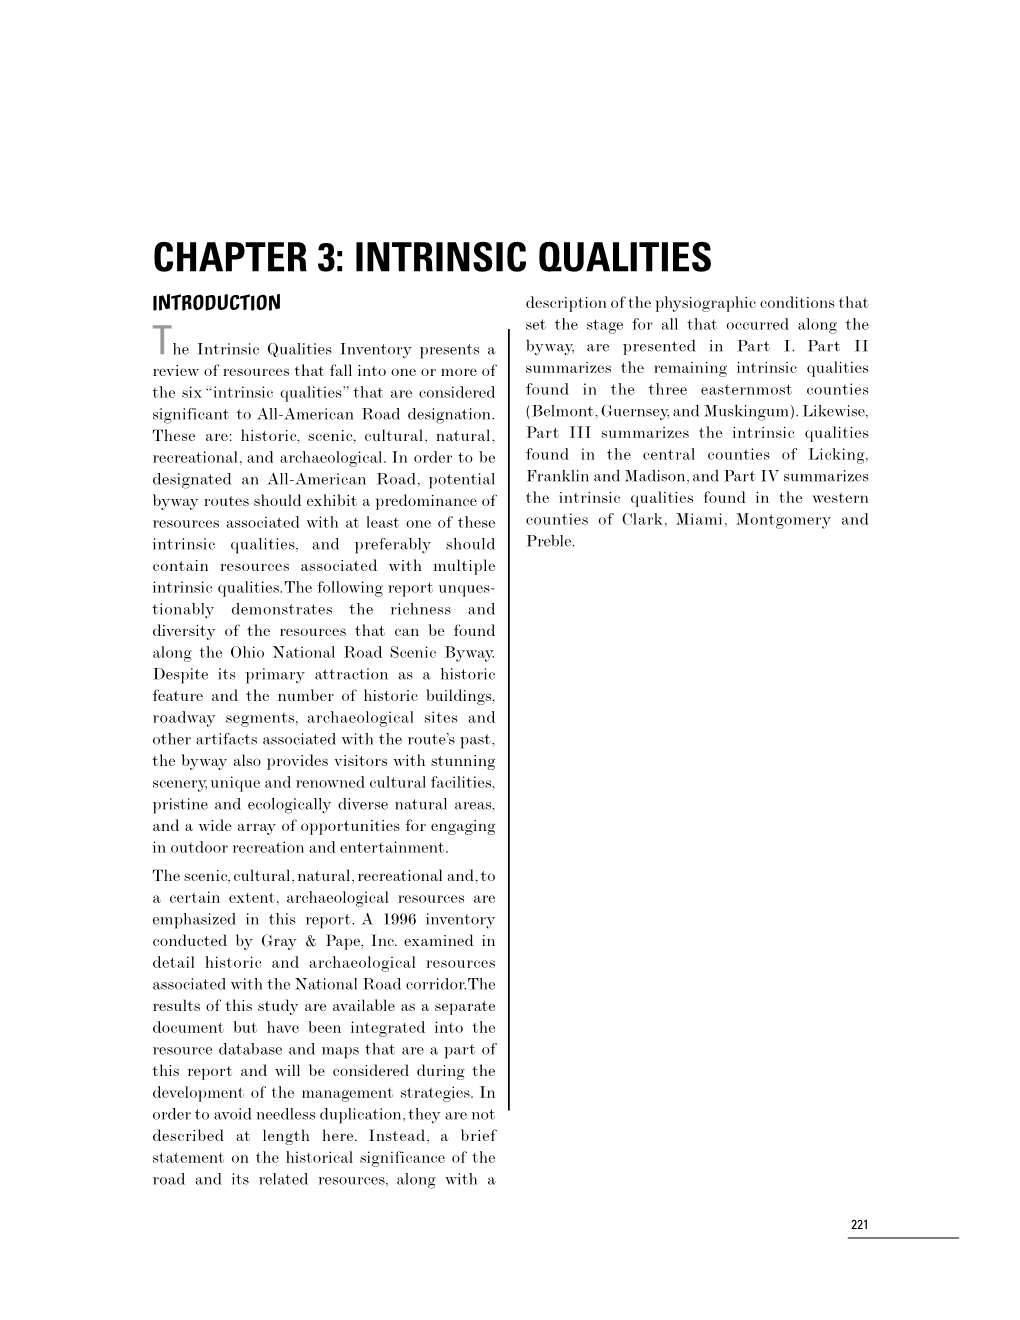 Intrinsic Qualities